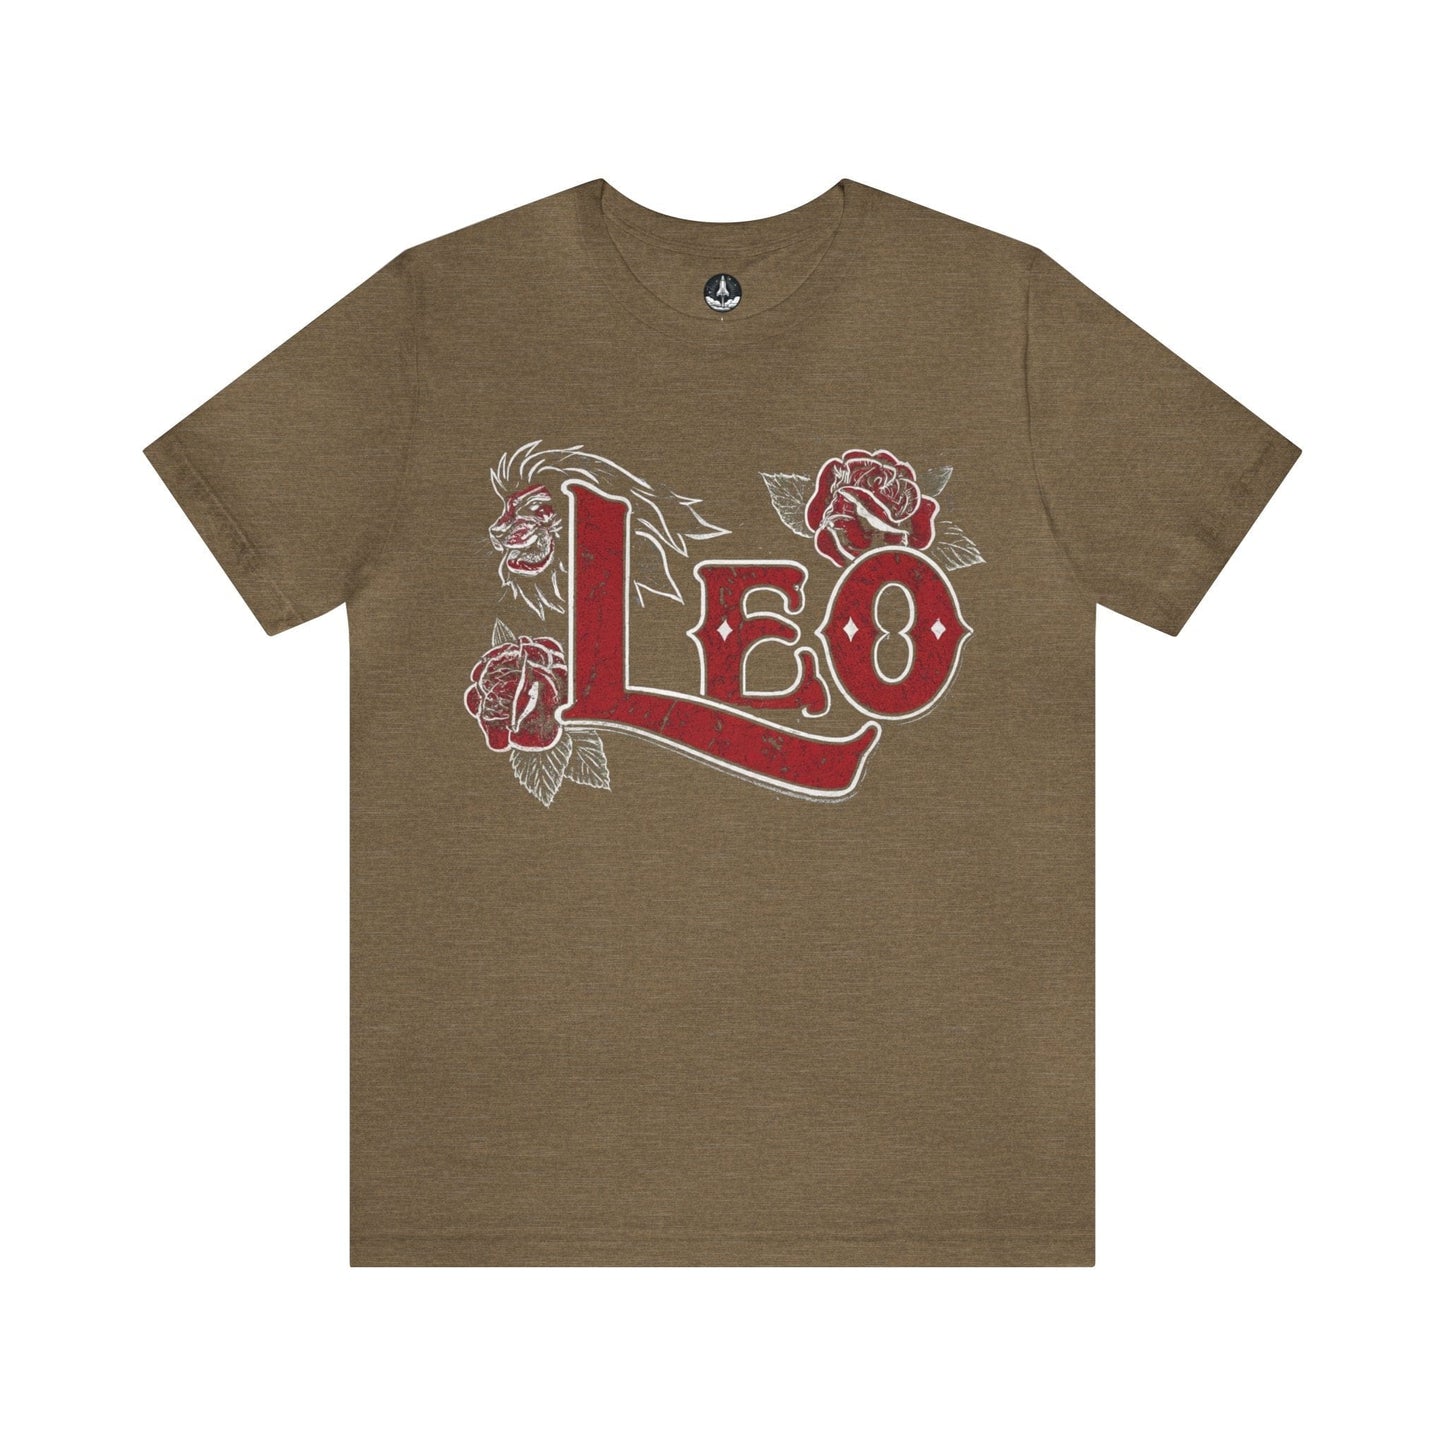 T-Shirt Heather Olive / S Classic Rockabilly Leo T-Shirt